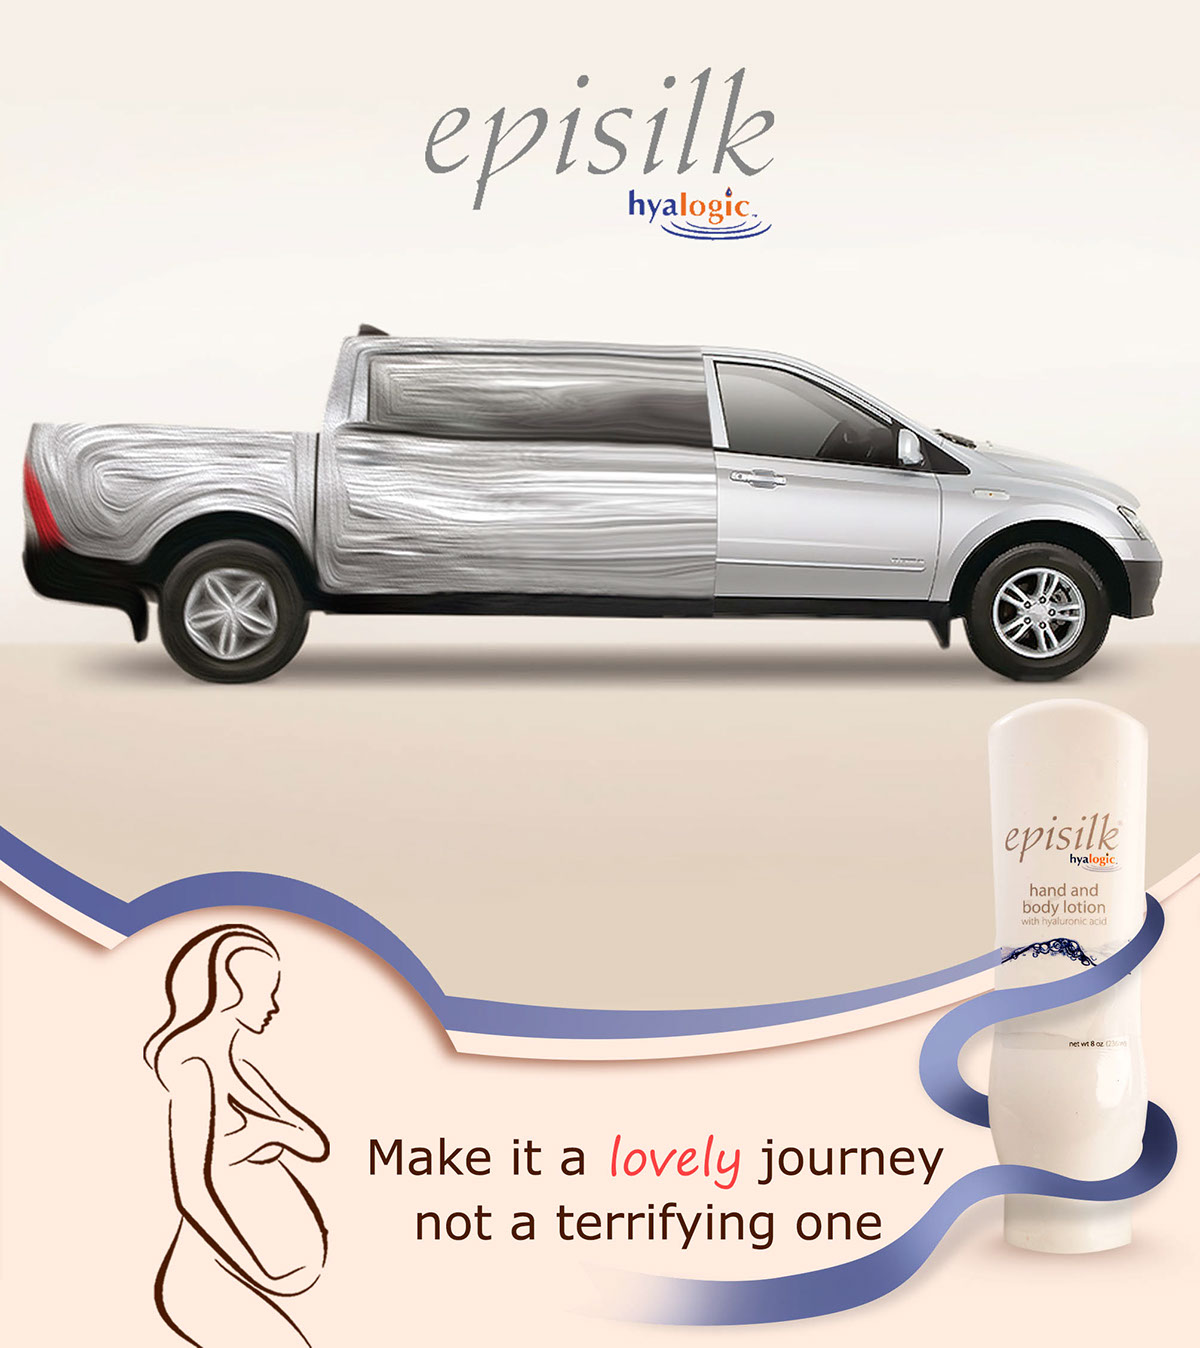 episilk women pregnant ads cream skin stretch marks creative ads